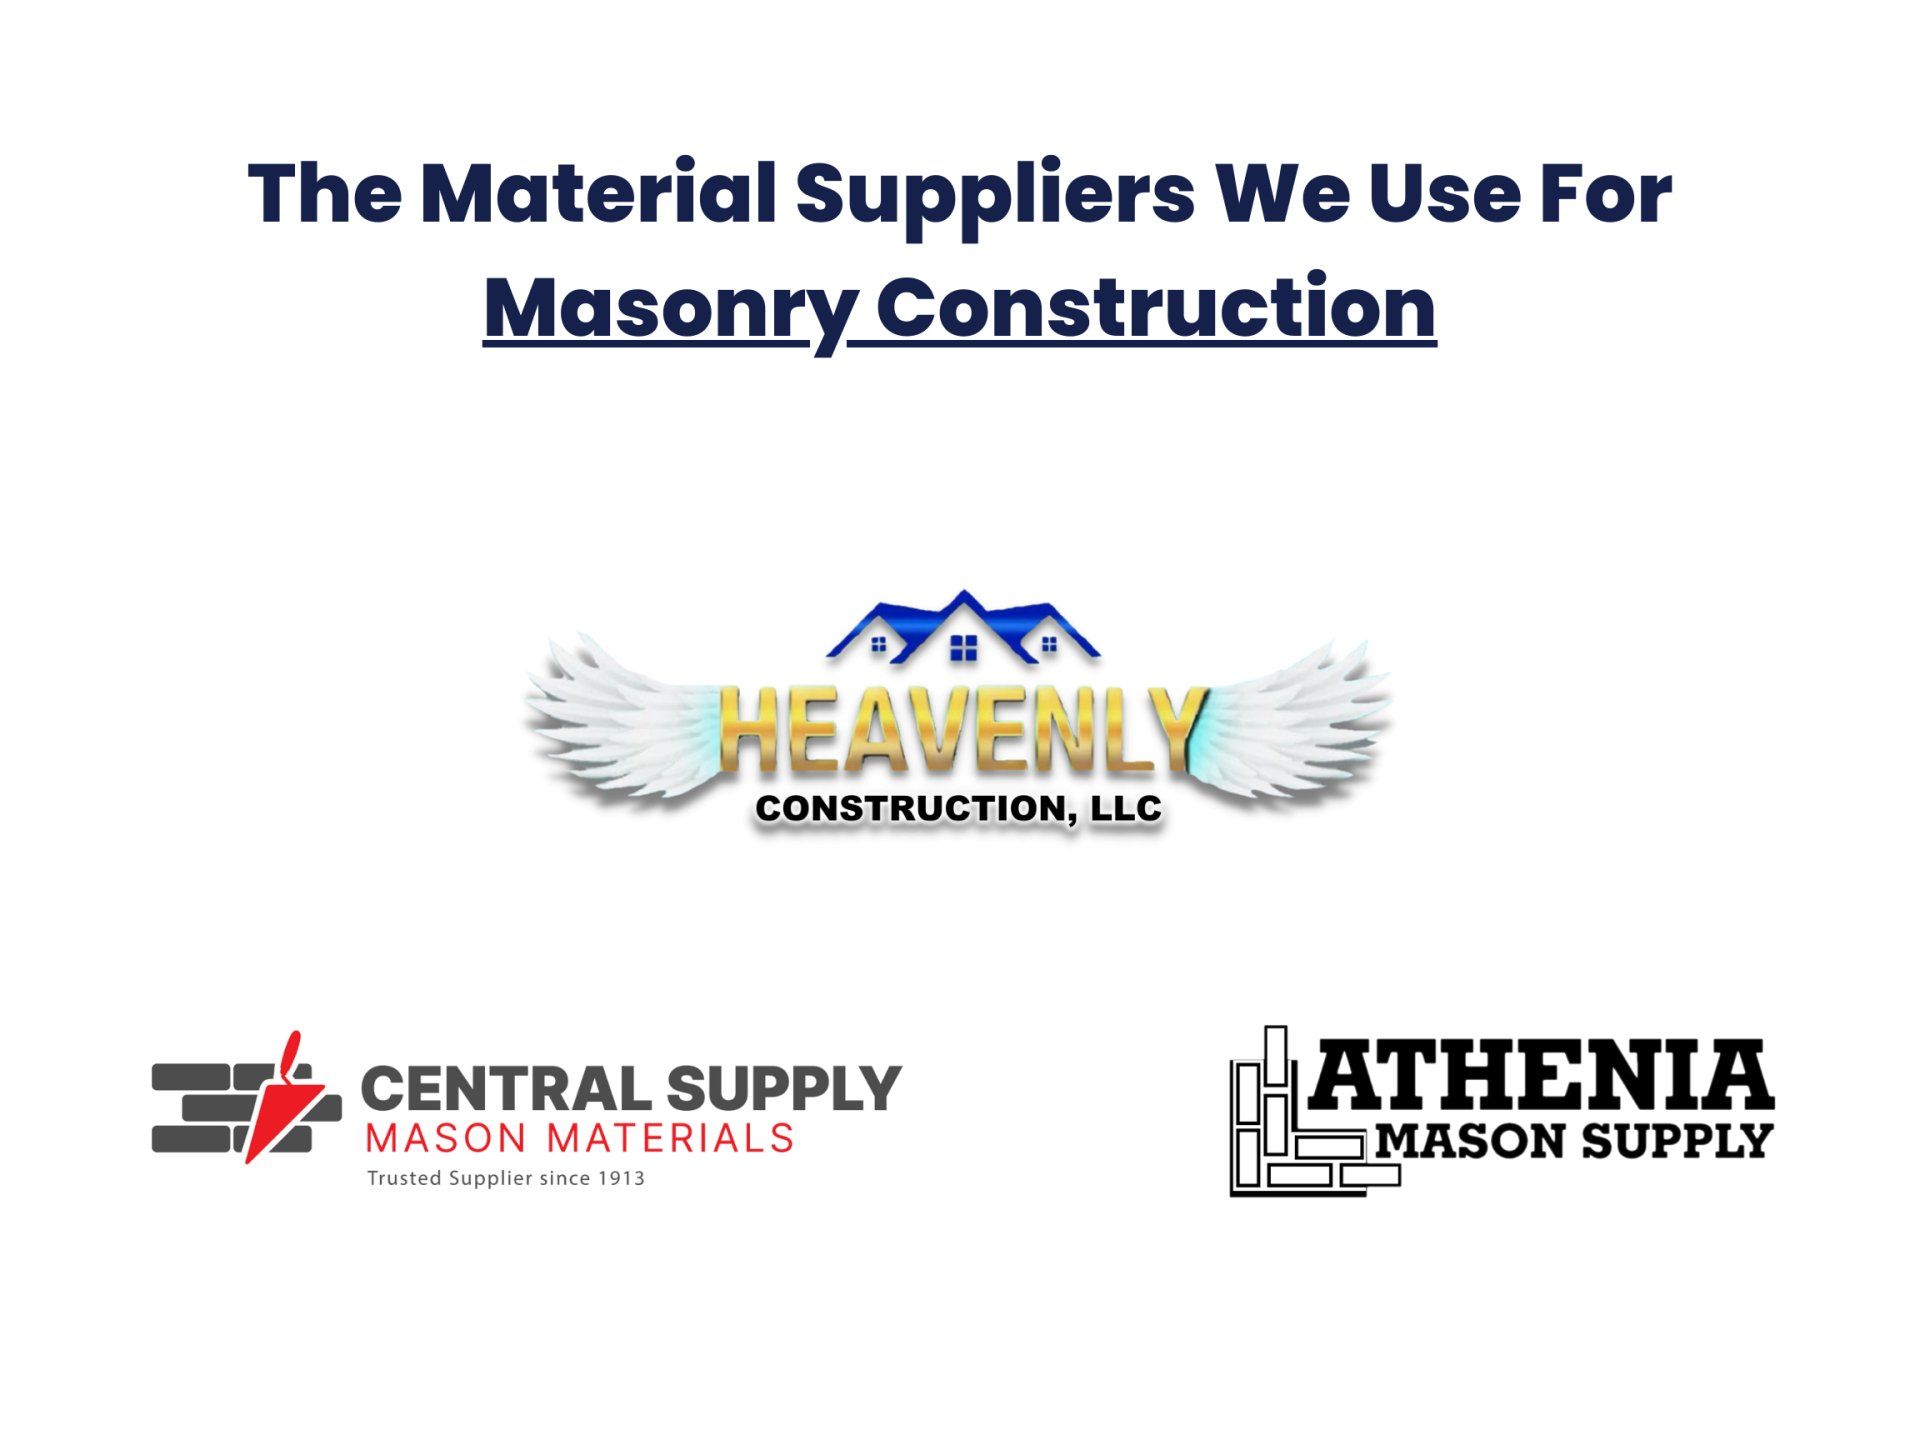 Central Supply Mason Materials and Athenia Mason Supply logos.